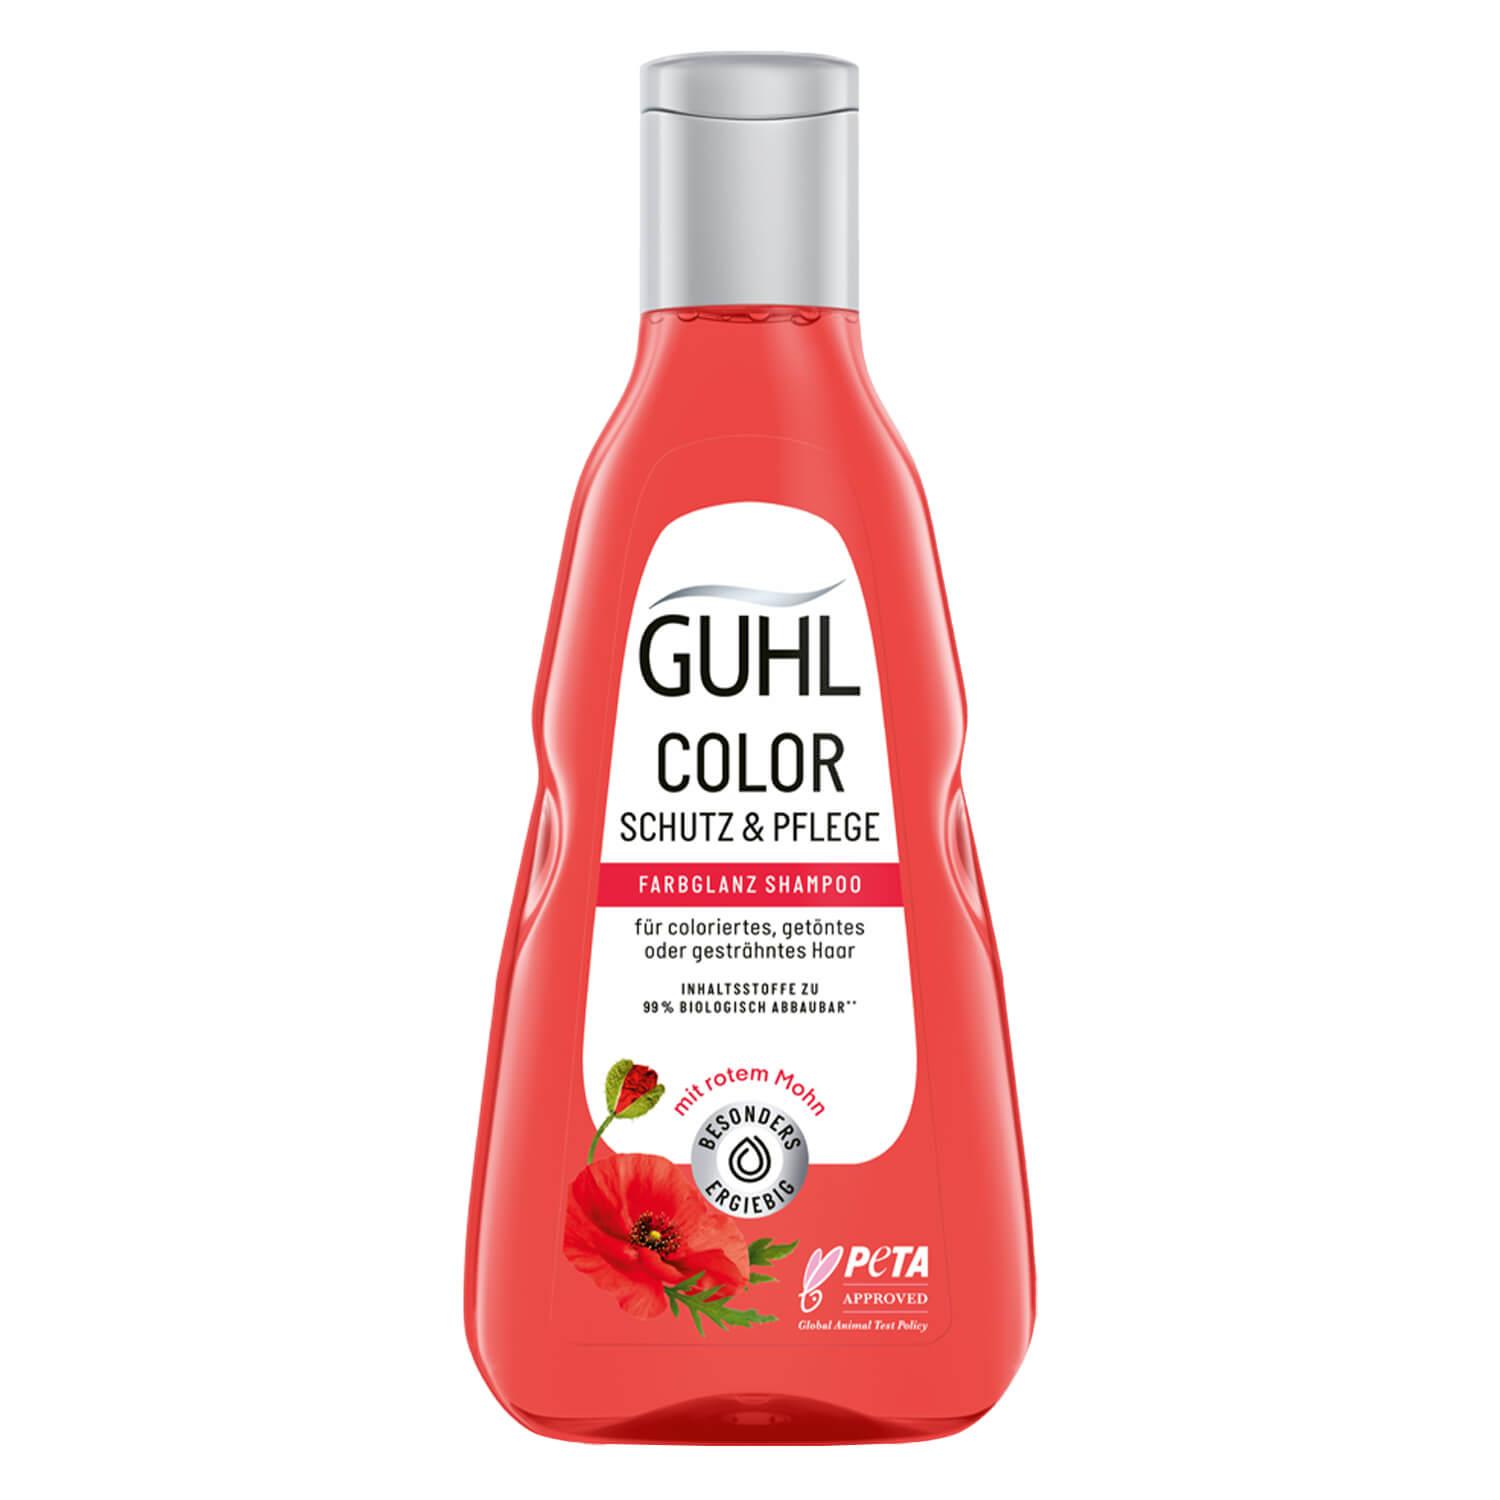 GUHL - COLOR SCHUTZ & PFLEGE Shampoo